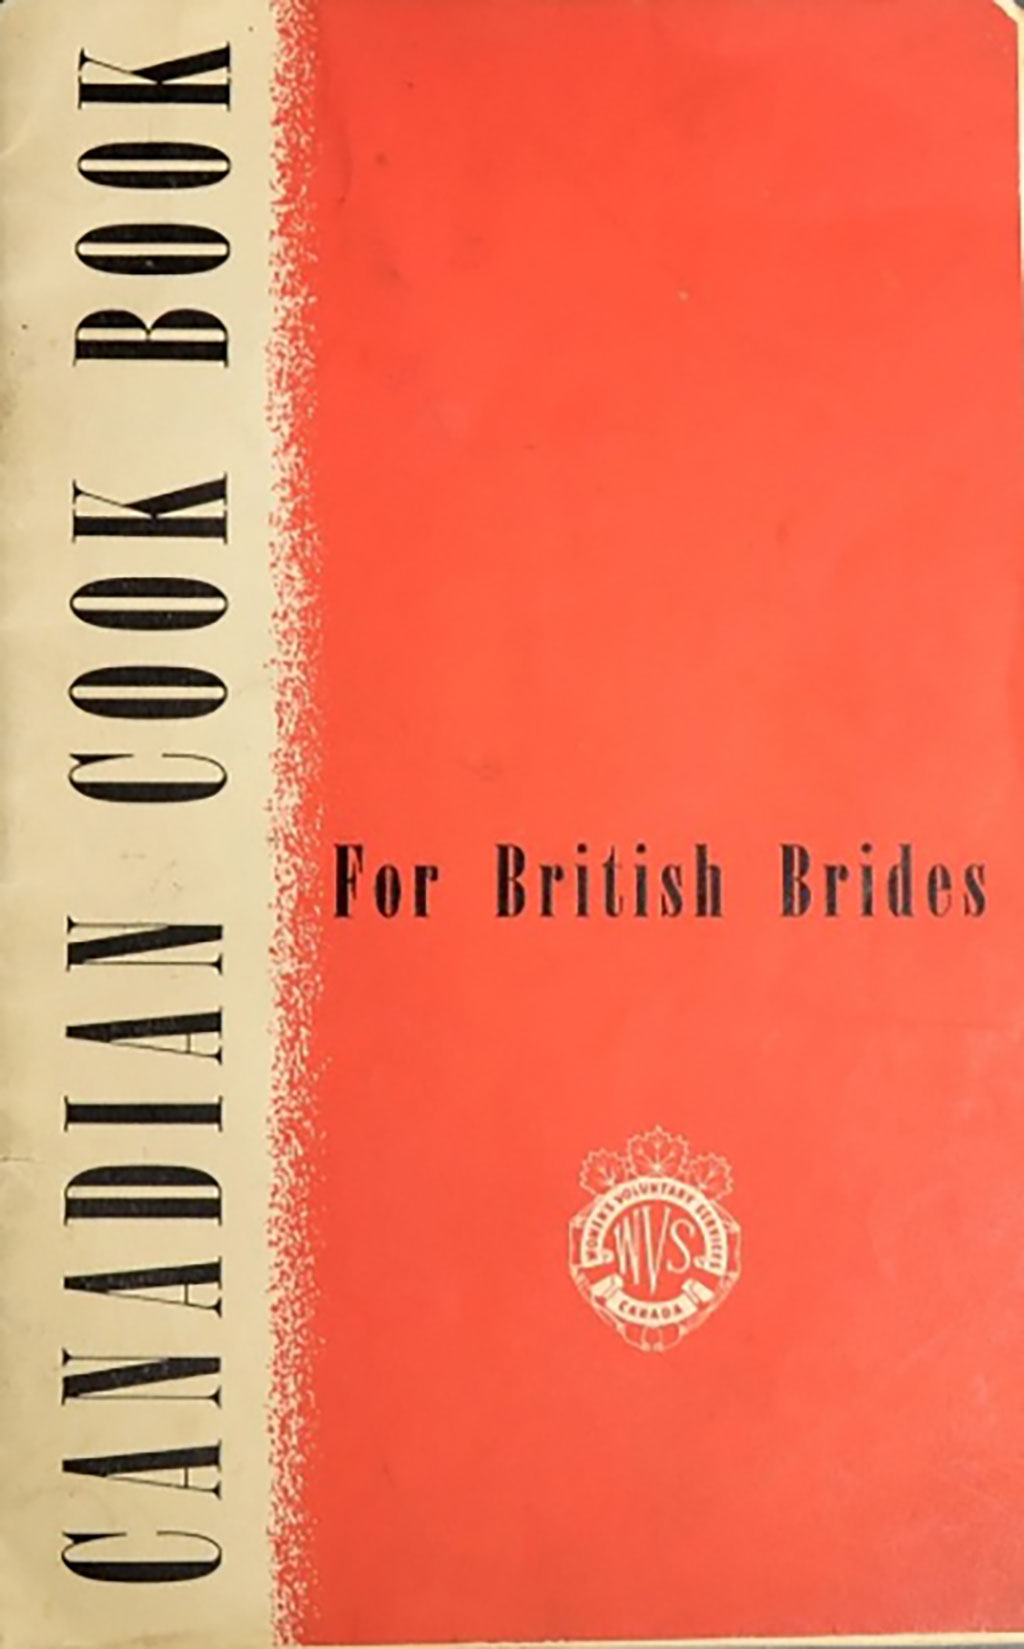 Red and cream-coloured cookbook for British war brides.